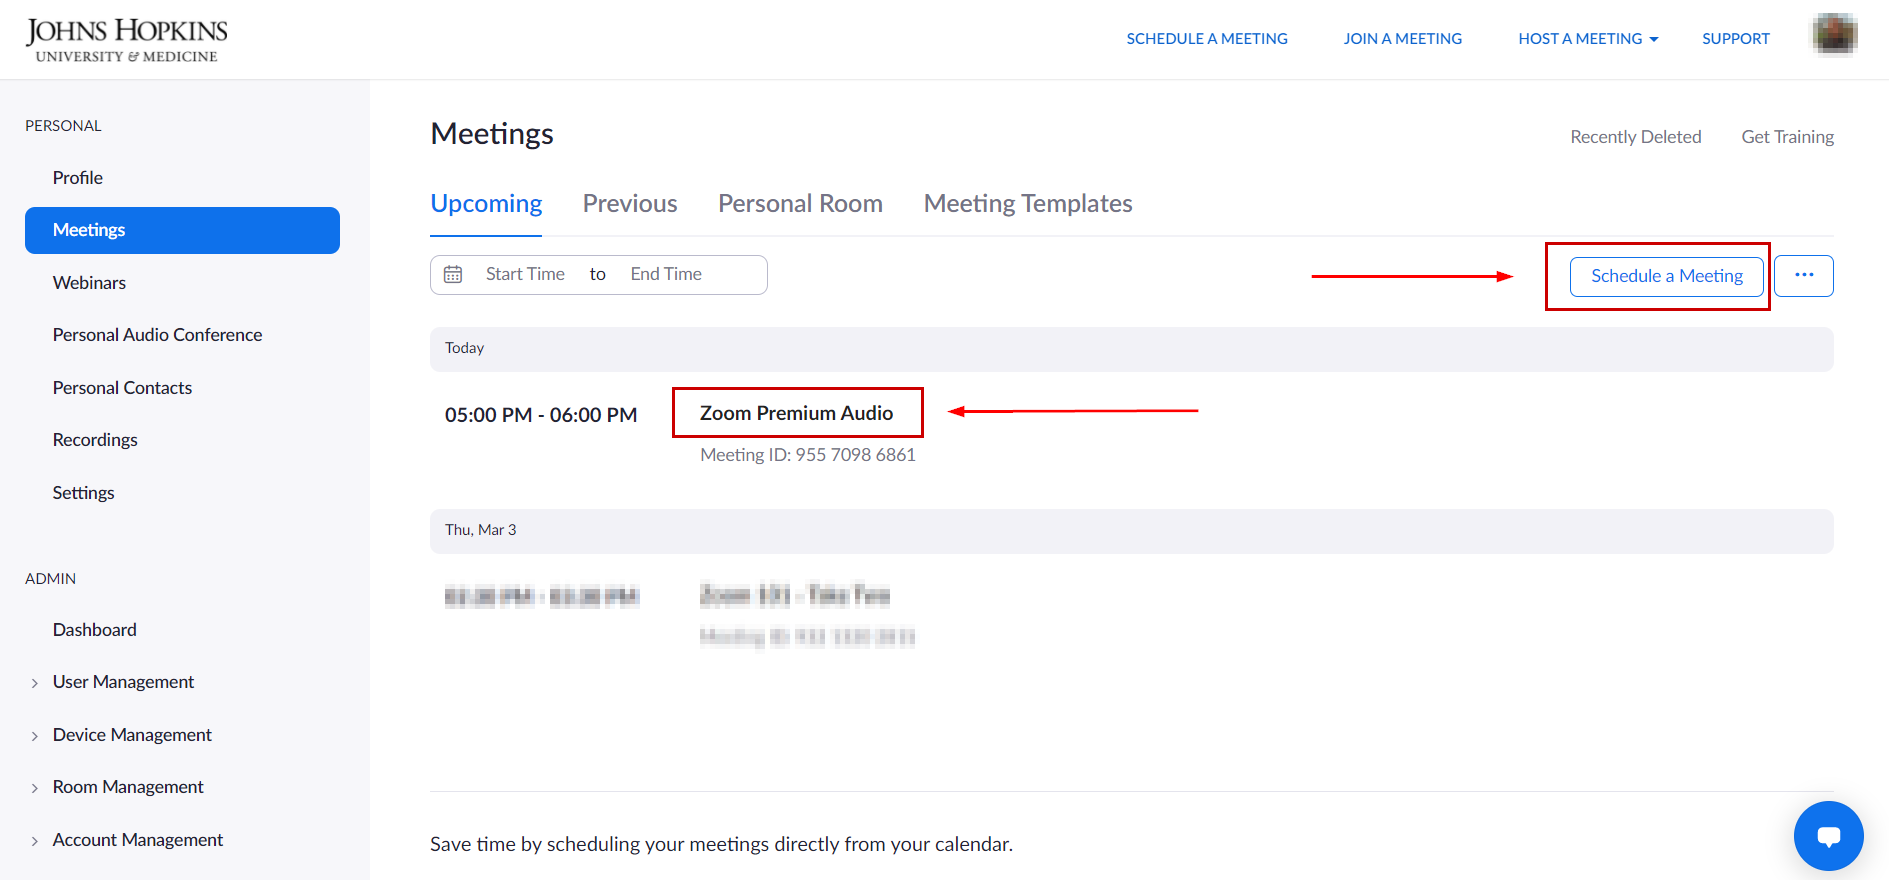 Schedule new meeting or edit pre-existing meeting